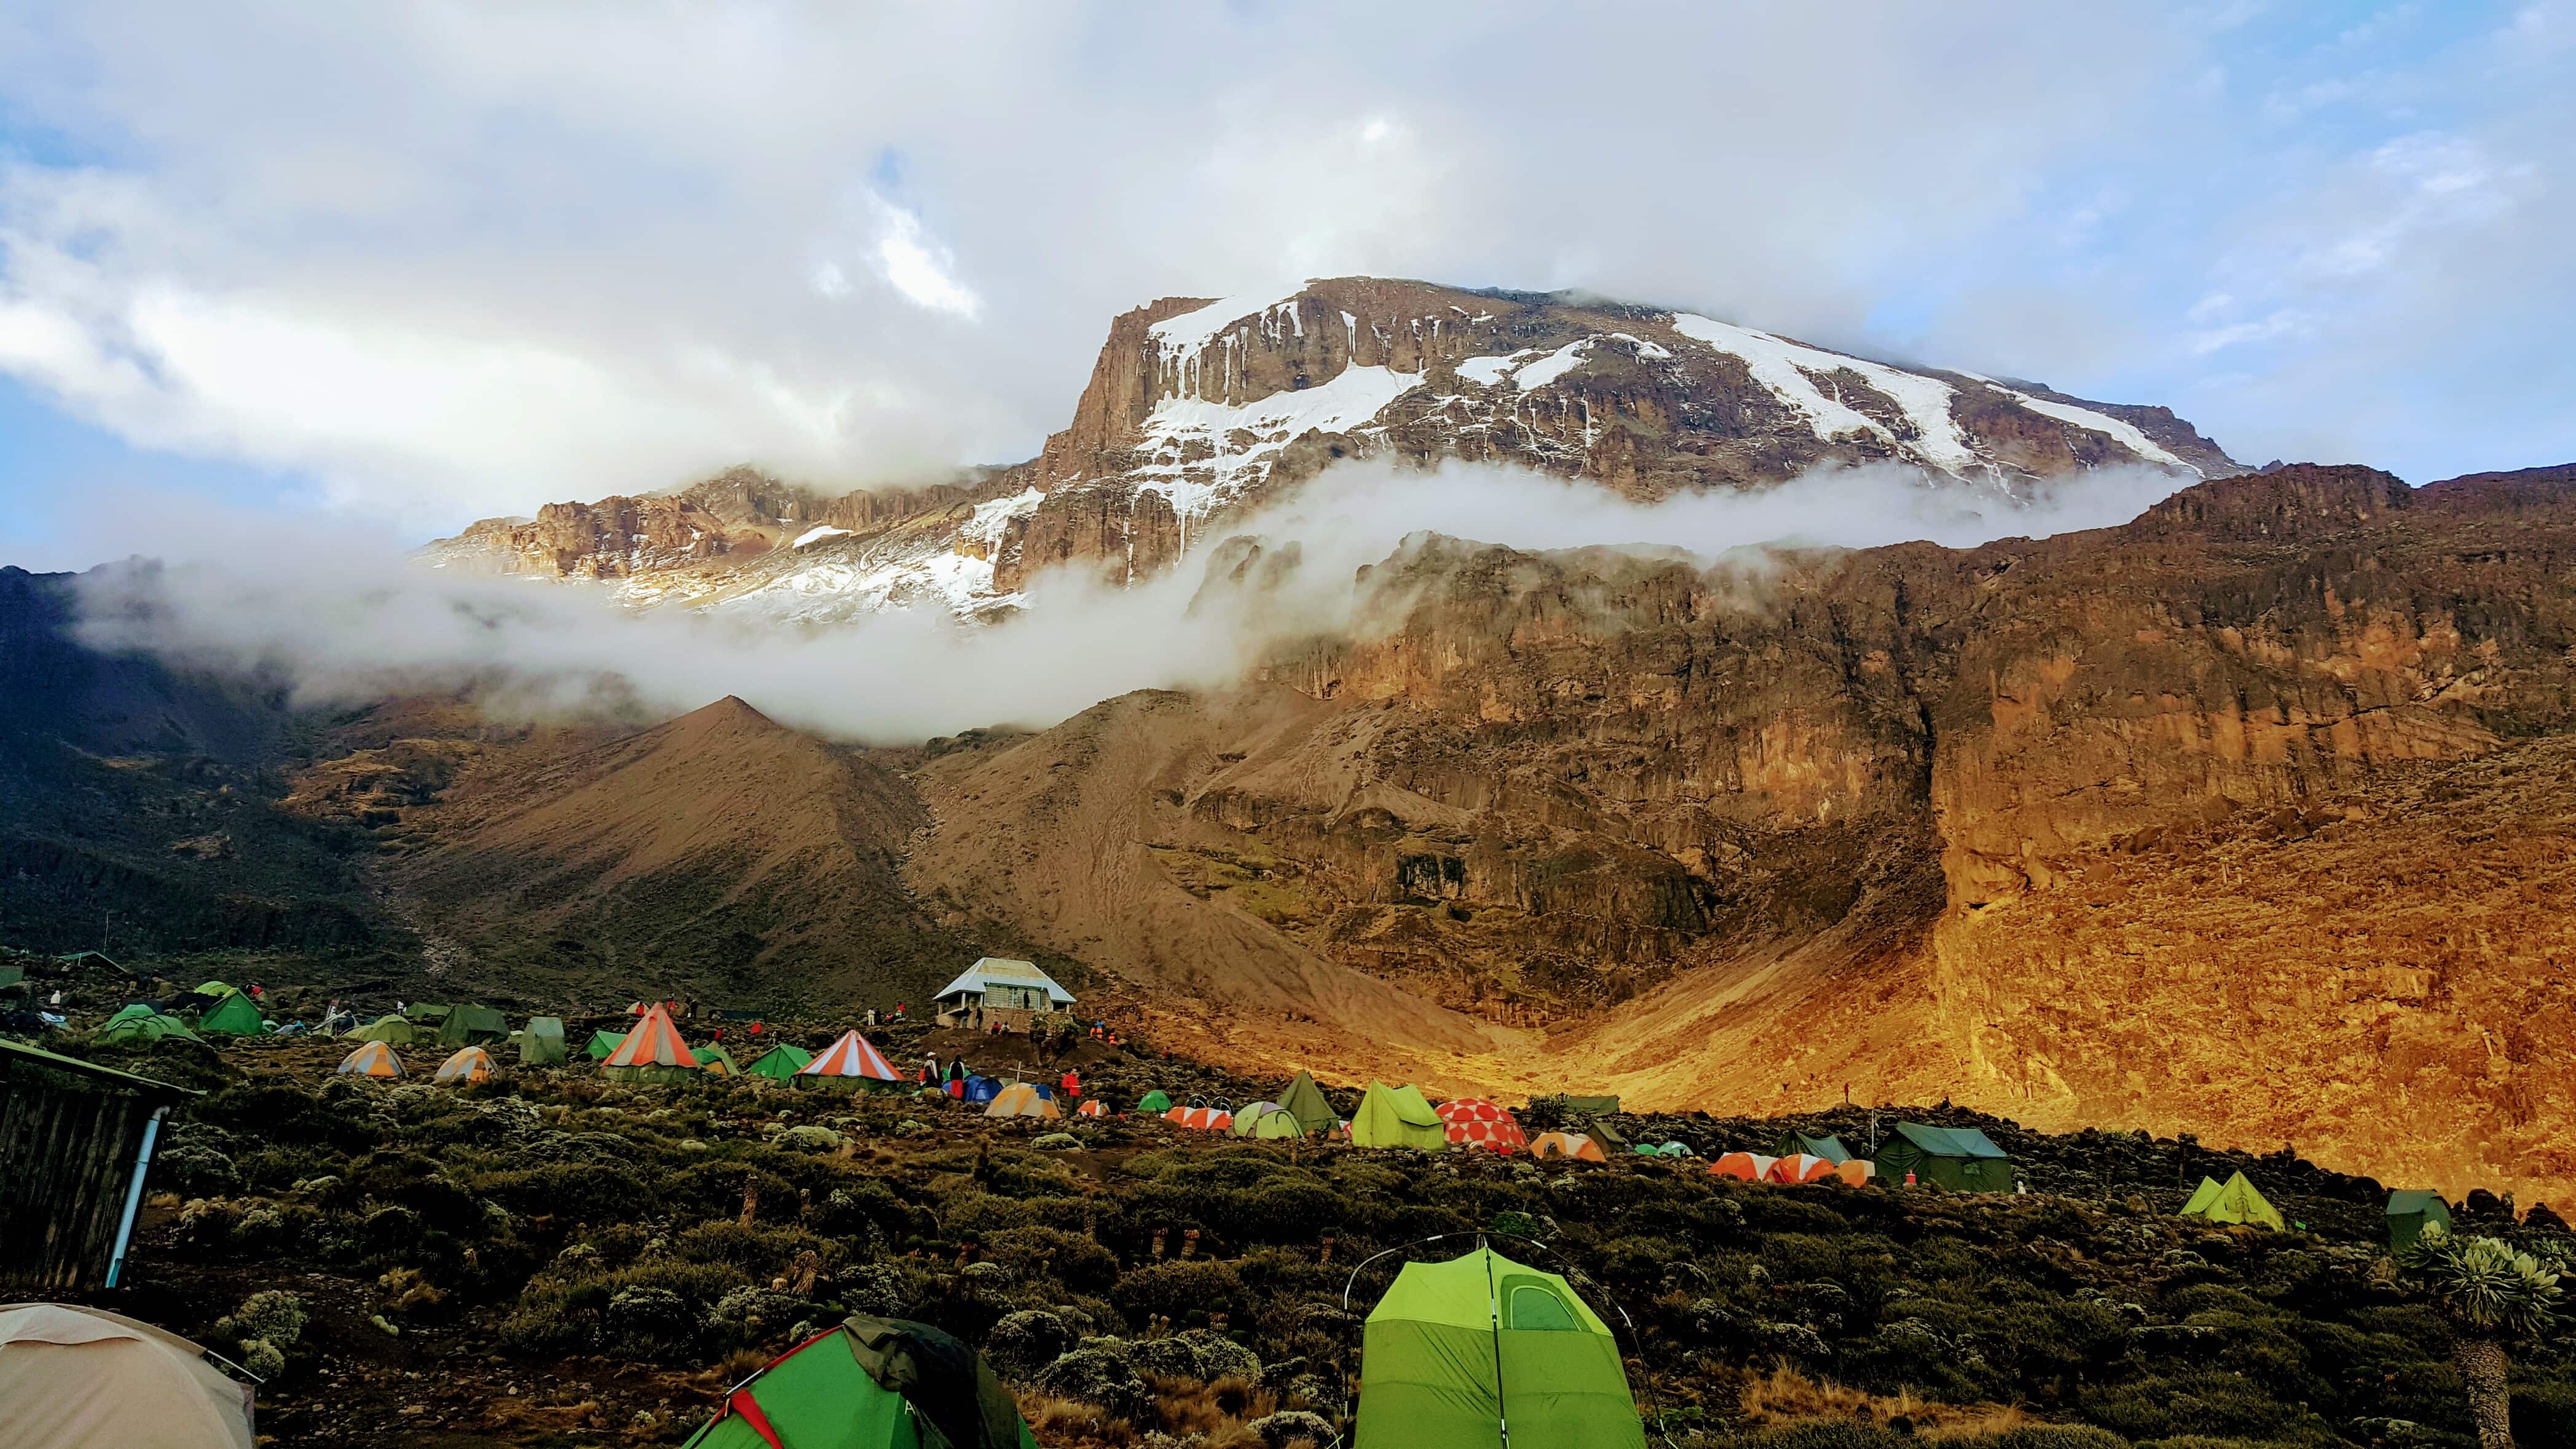 Campsite on Kilimanjaro. Climbing Africa's tallest mountain is a popular reason to travel to Tanzania. (photo: foxycoxy, Pixabay)